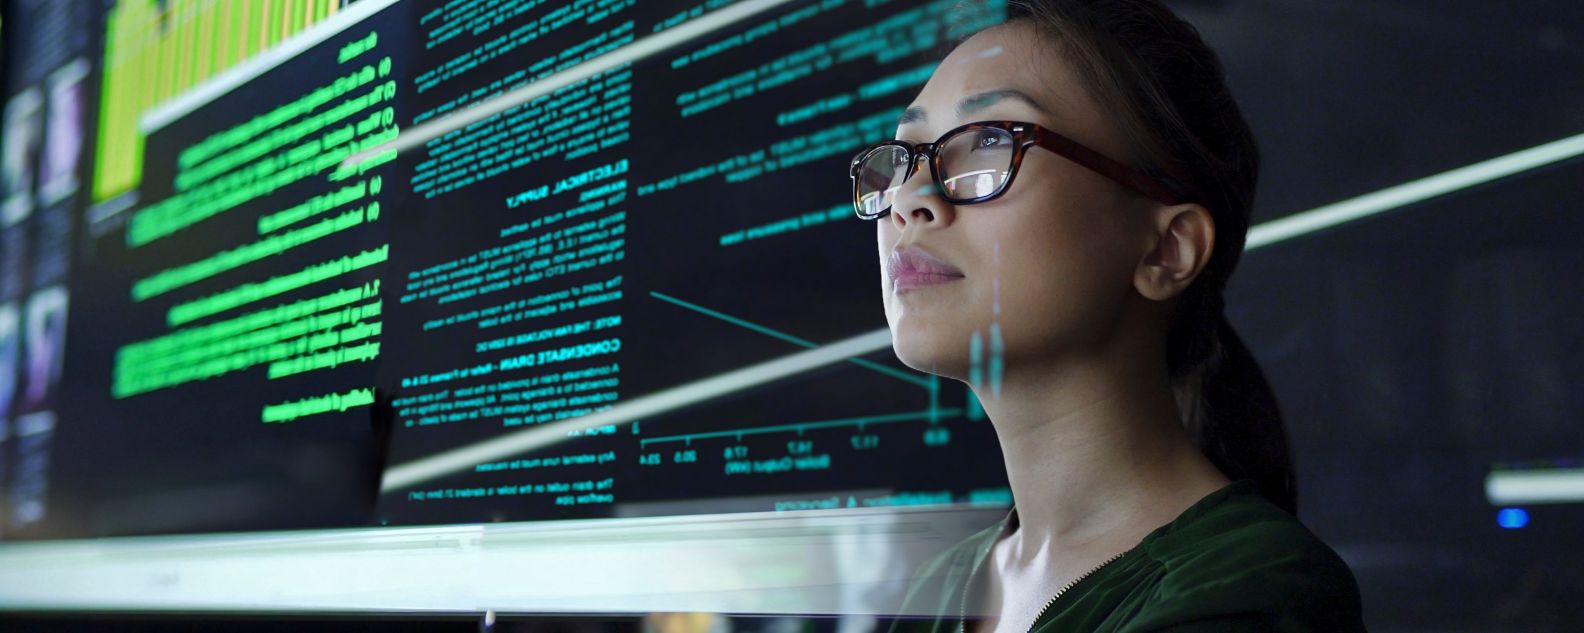 Joven asiática analiza datos en pantalla transparente en una oficina oscura